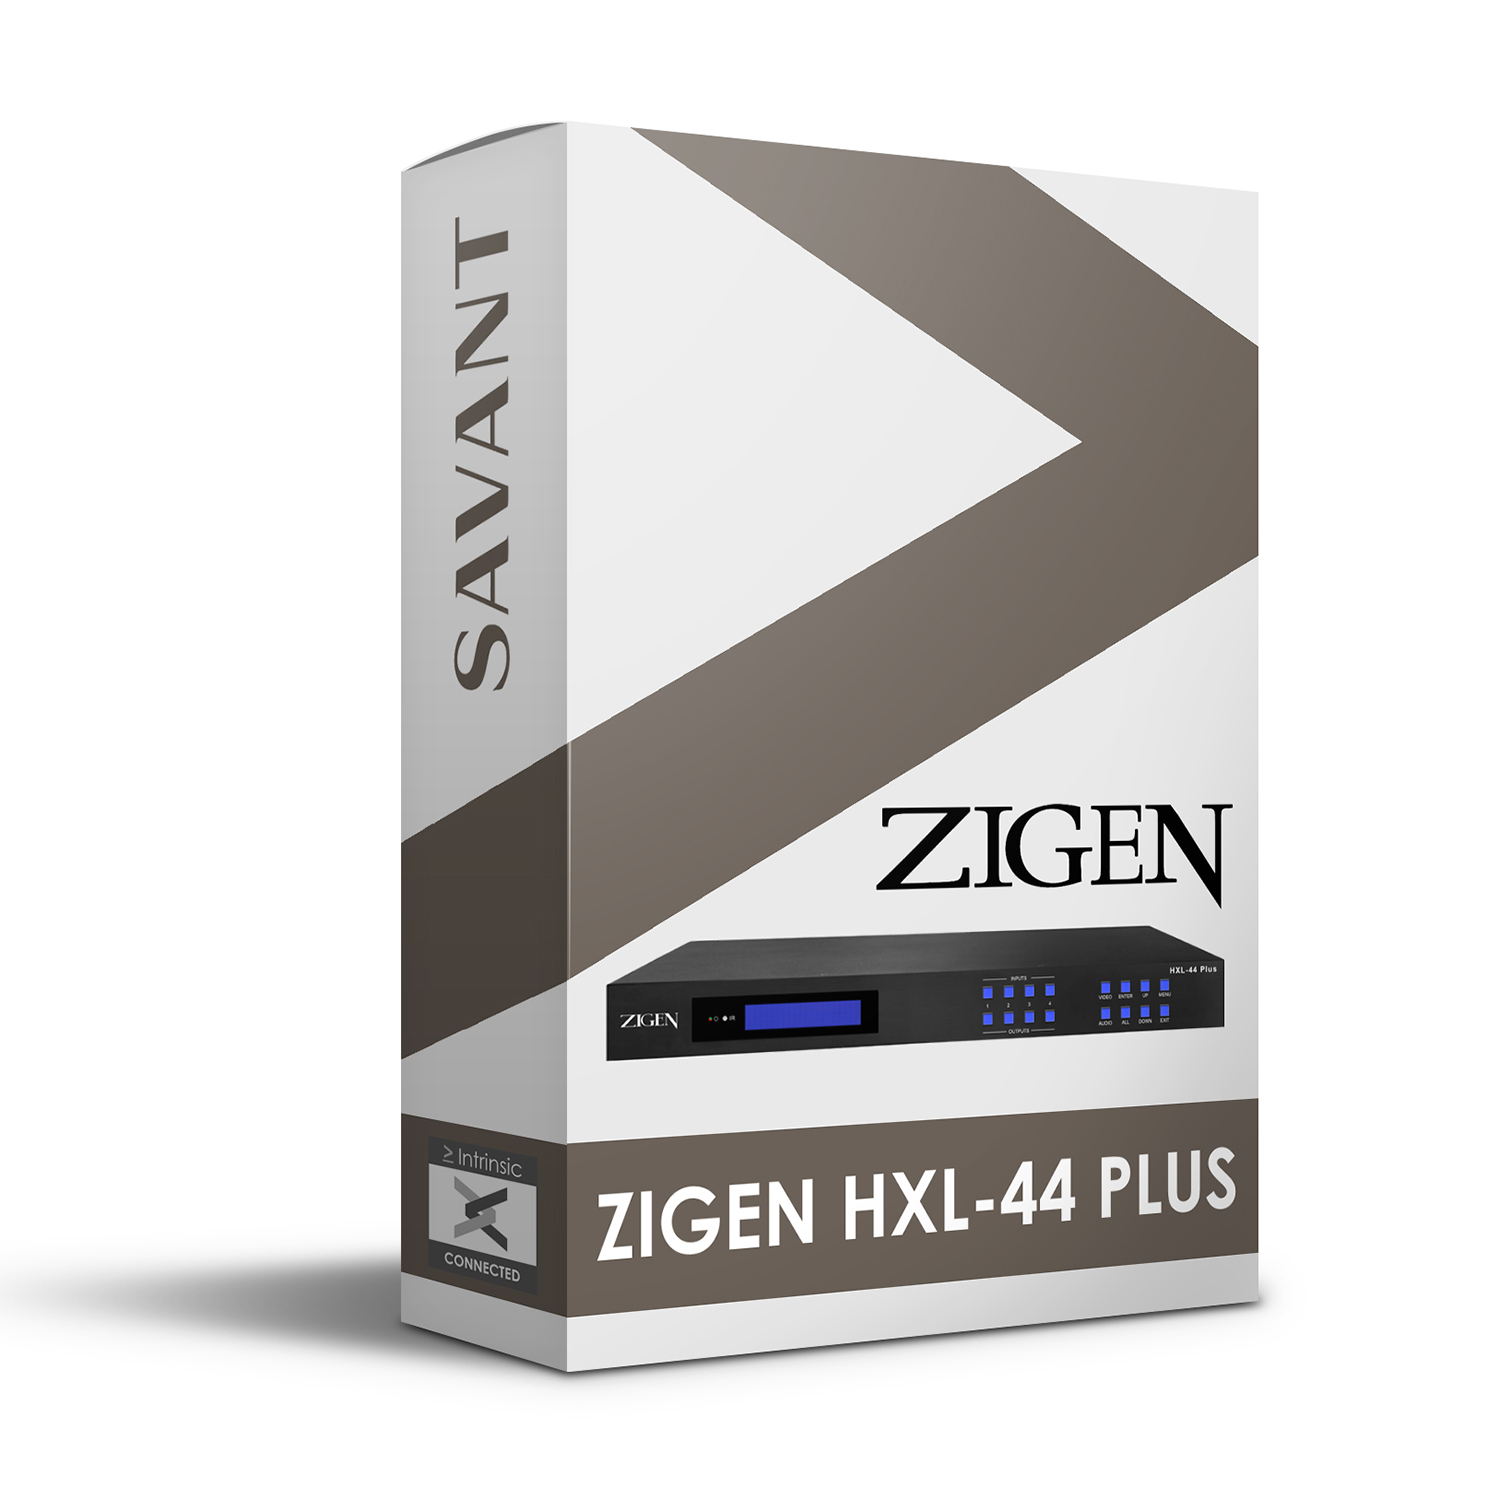 Zigen HXL-44 Plus Profile for Savant